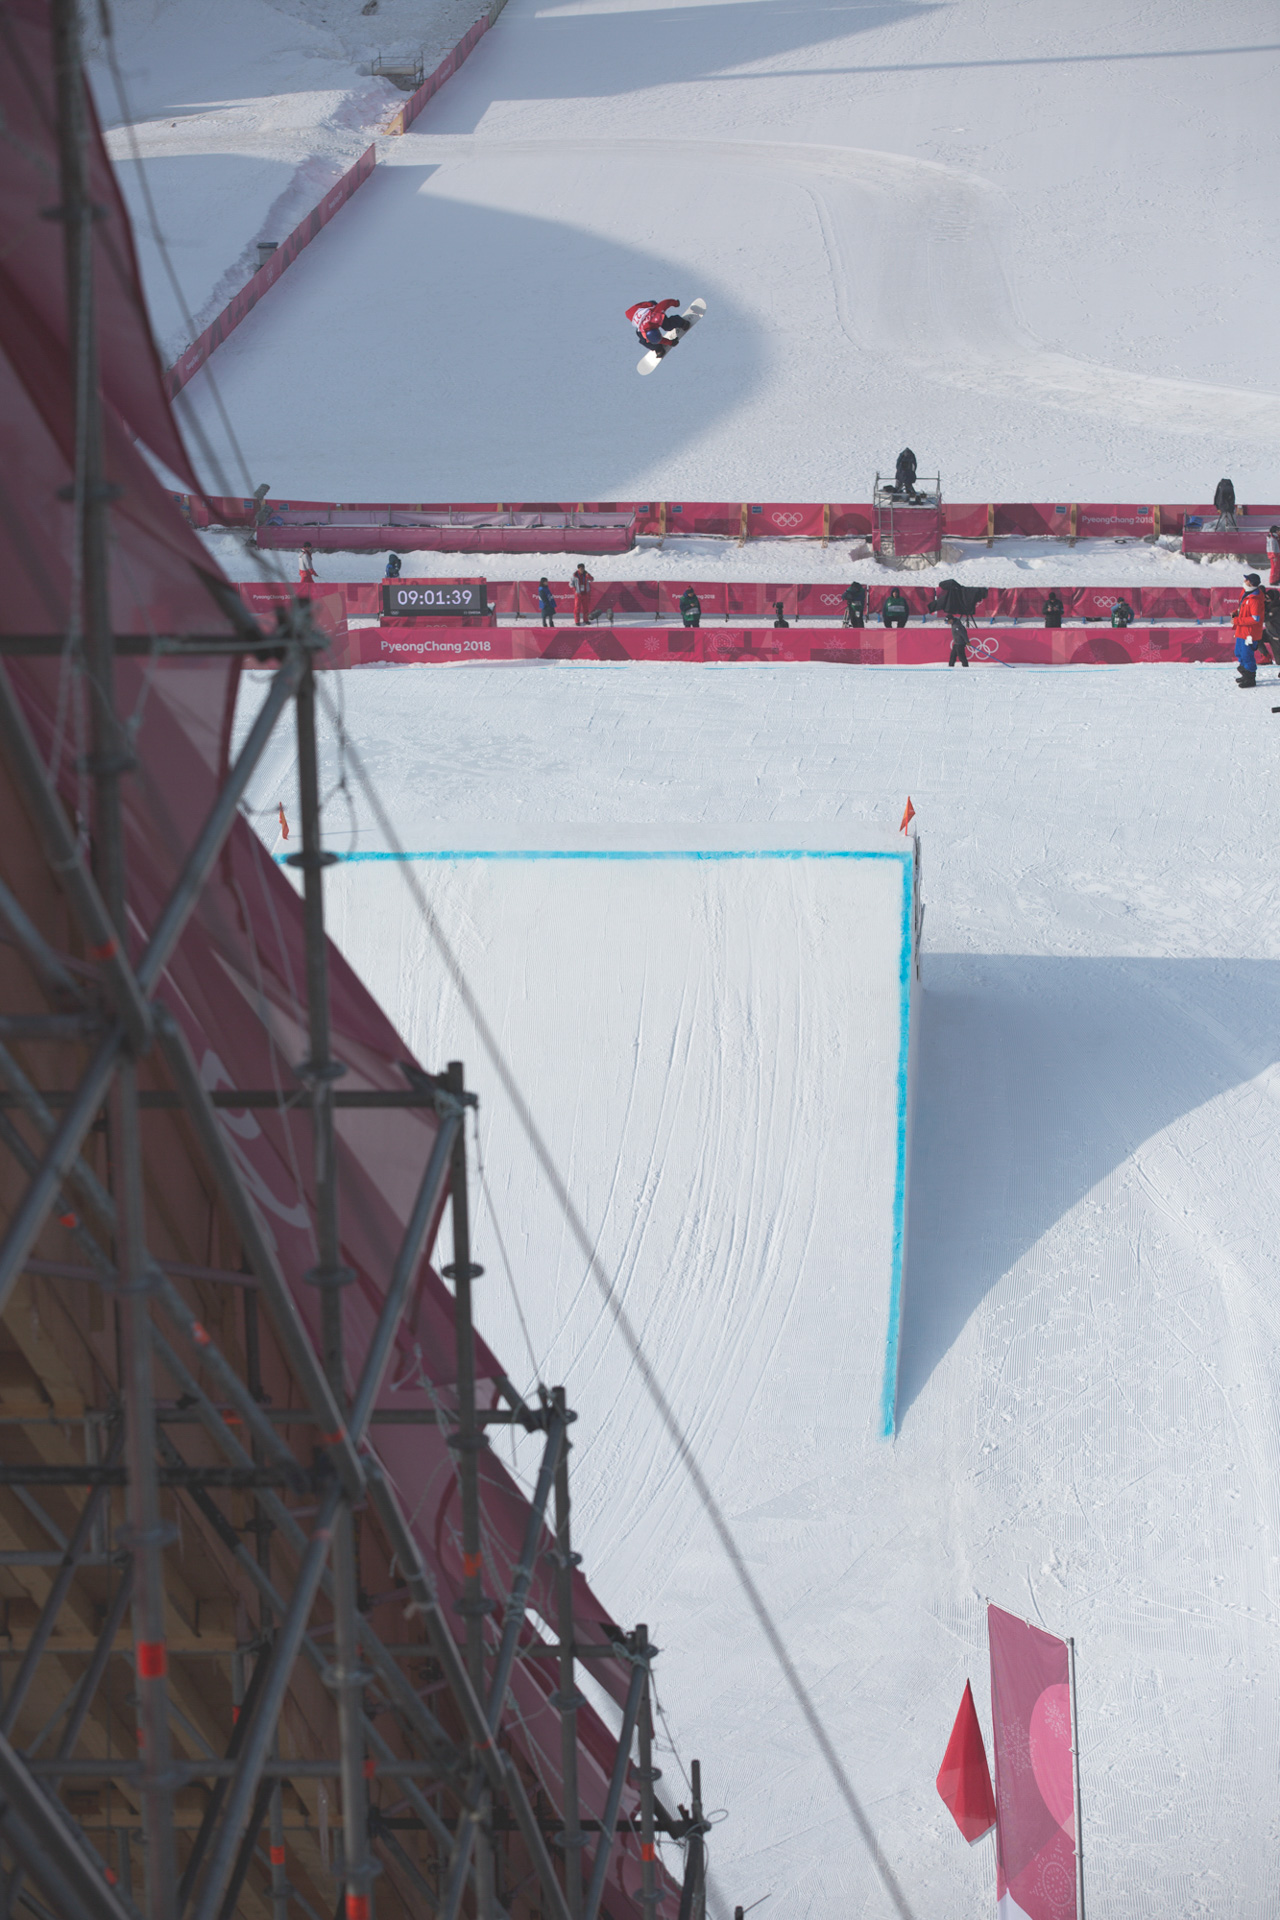 Billy Morgan wins bronze in snowboard Big Air at the 2018 Olympics in Pyeongchang